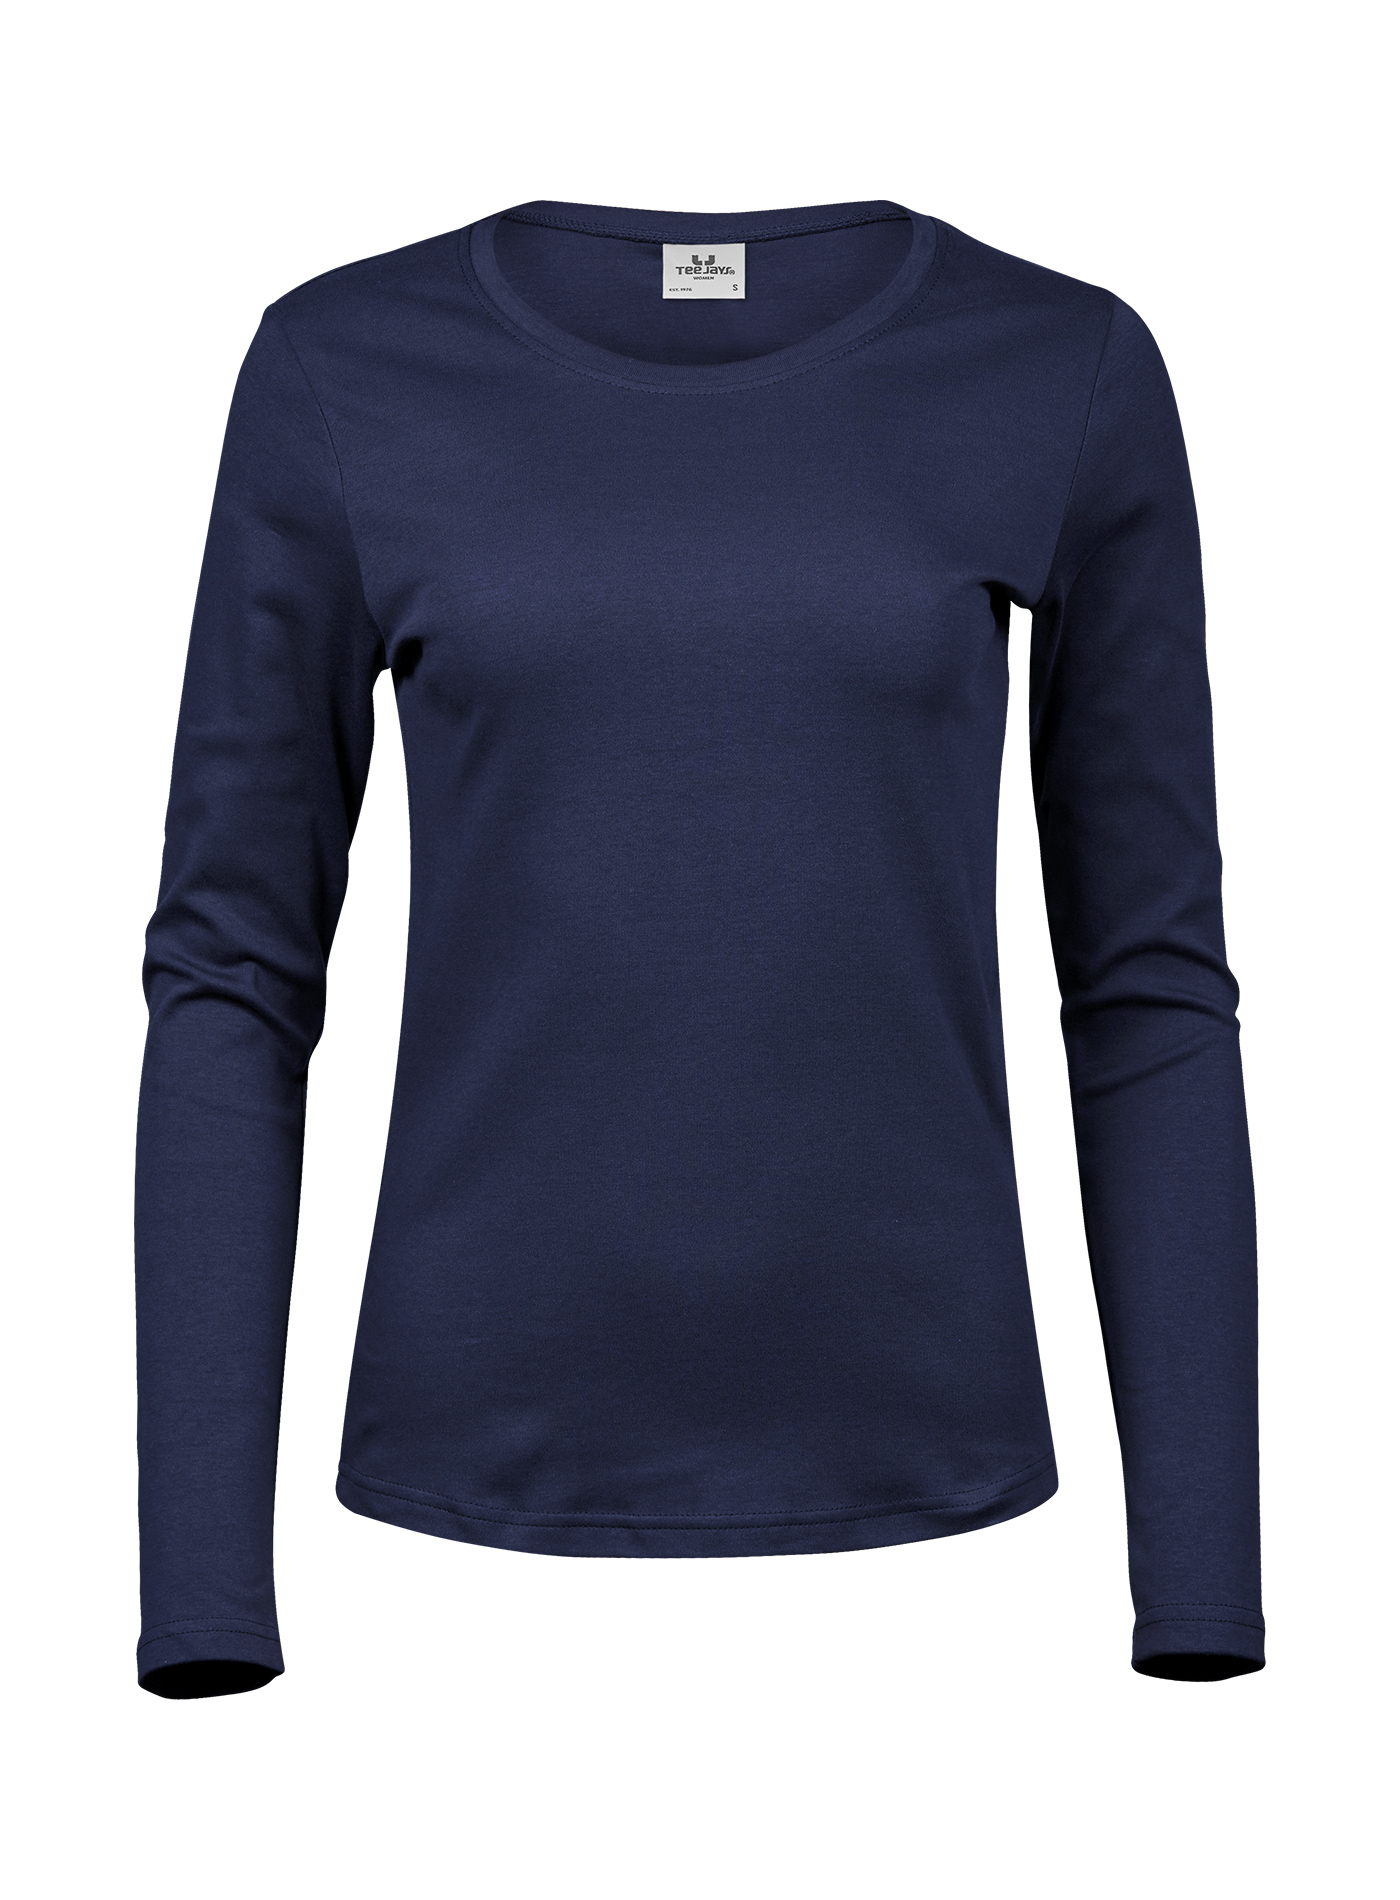 Dámské tričko s dlouhými rukávy Tee Jays Interlock - Námořní modrá XL